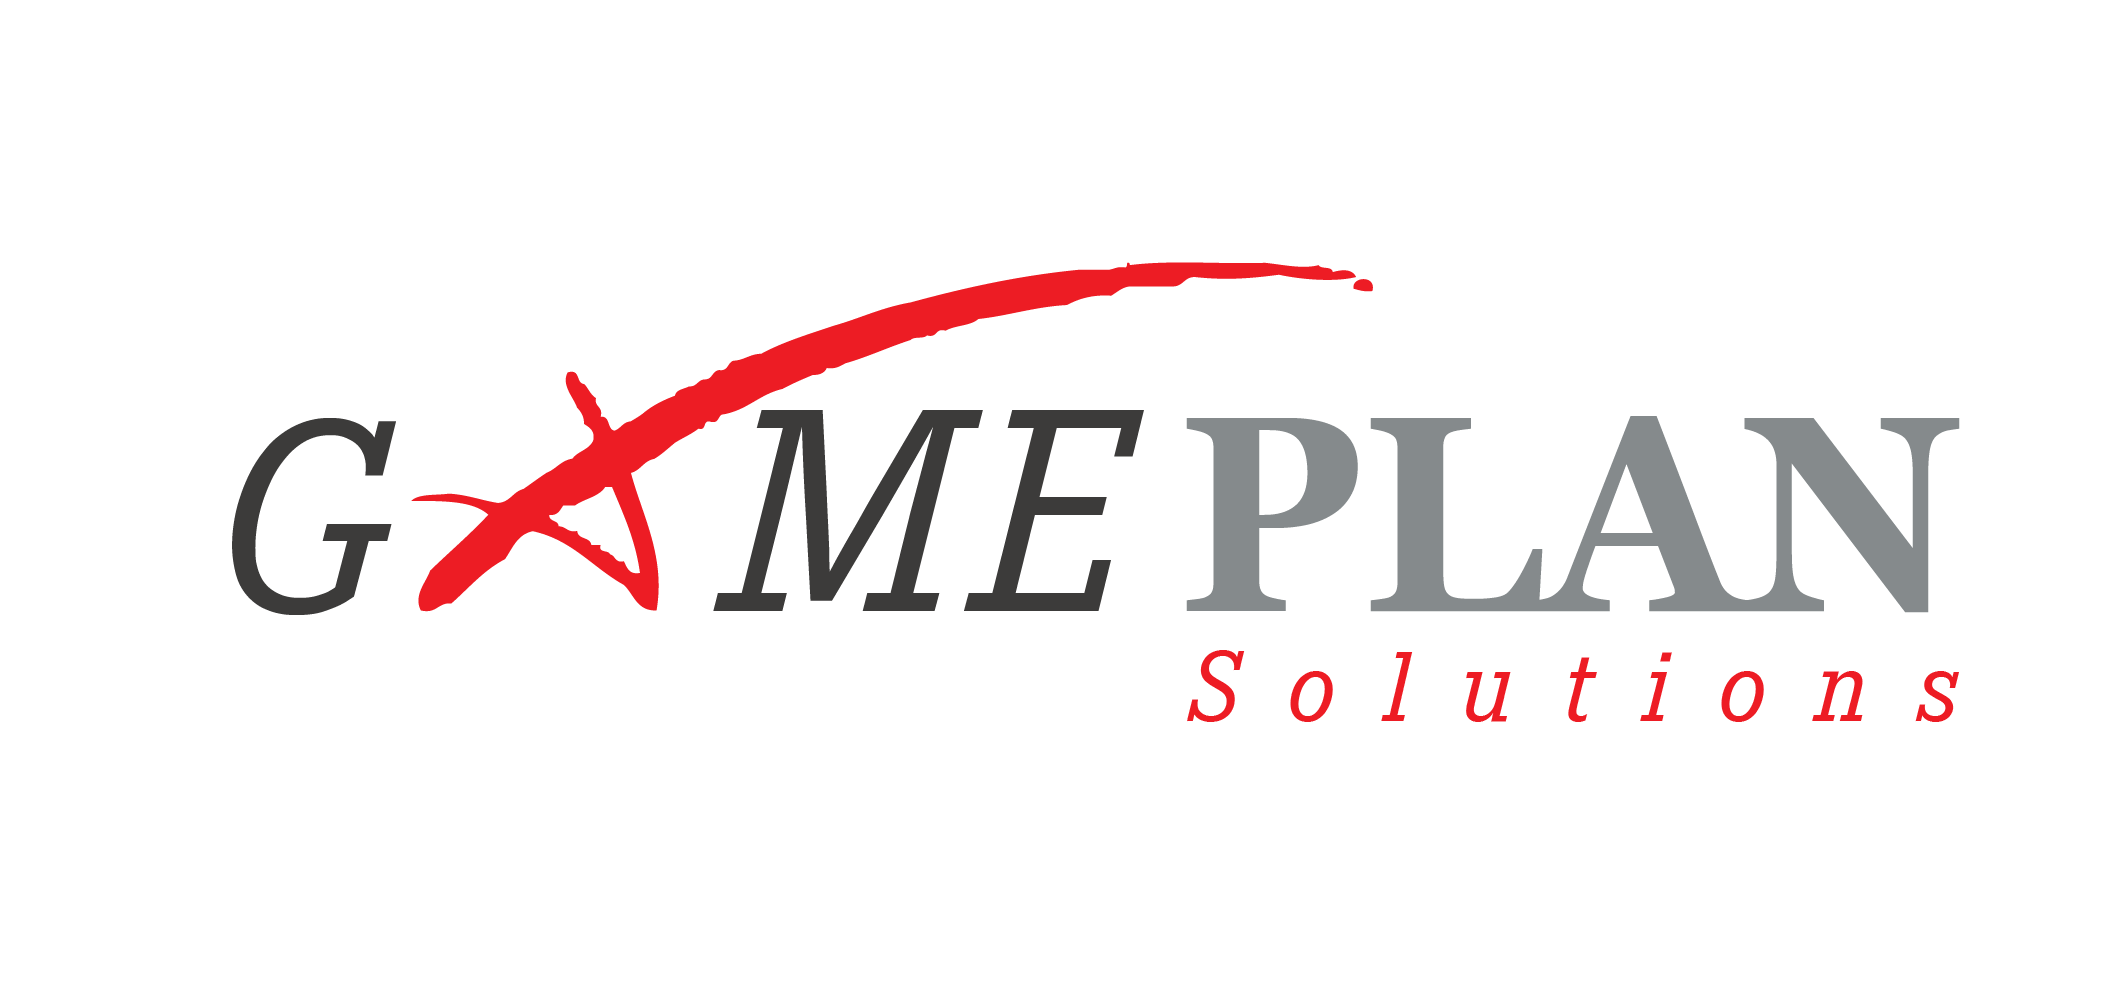 Gameplan Training Solutions Logo